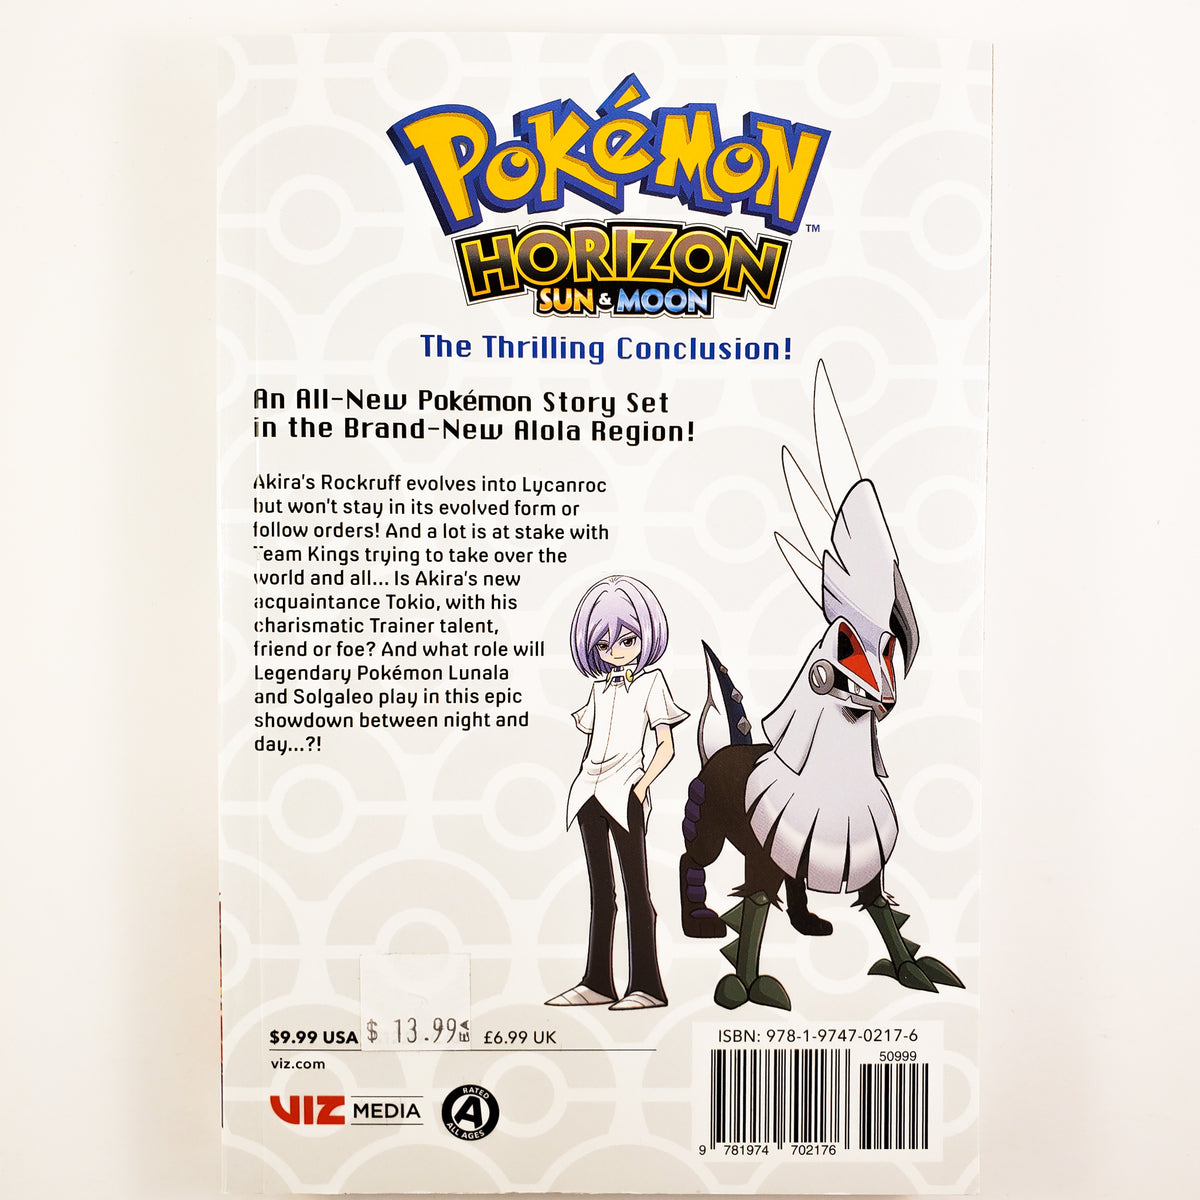 Pokémon Horizon: Sun and Moon Ser.: Pokémon Horizon: Sun and Moon, Vol. 2  by Ten'ya Yabuno (2018, Trade Paperback) for sale online